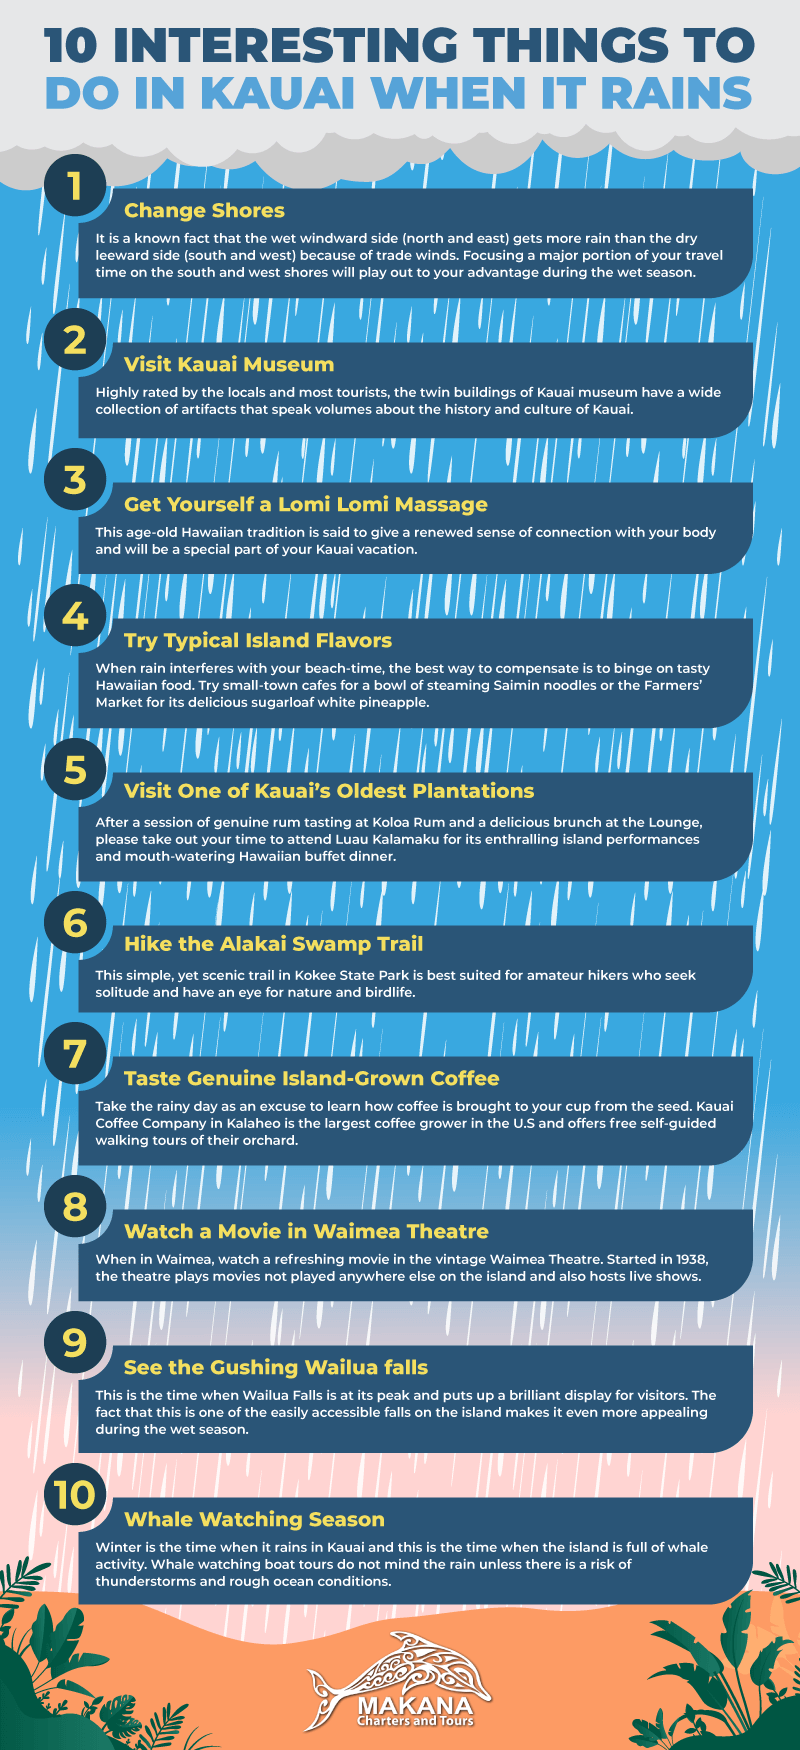 Interesting Things in Kauai When It Rains - Infographic by Makana Charters